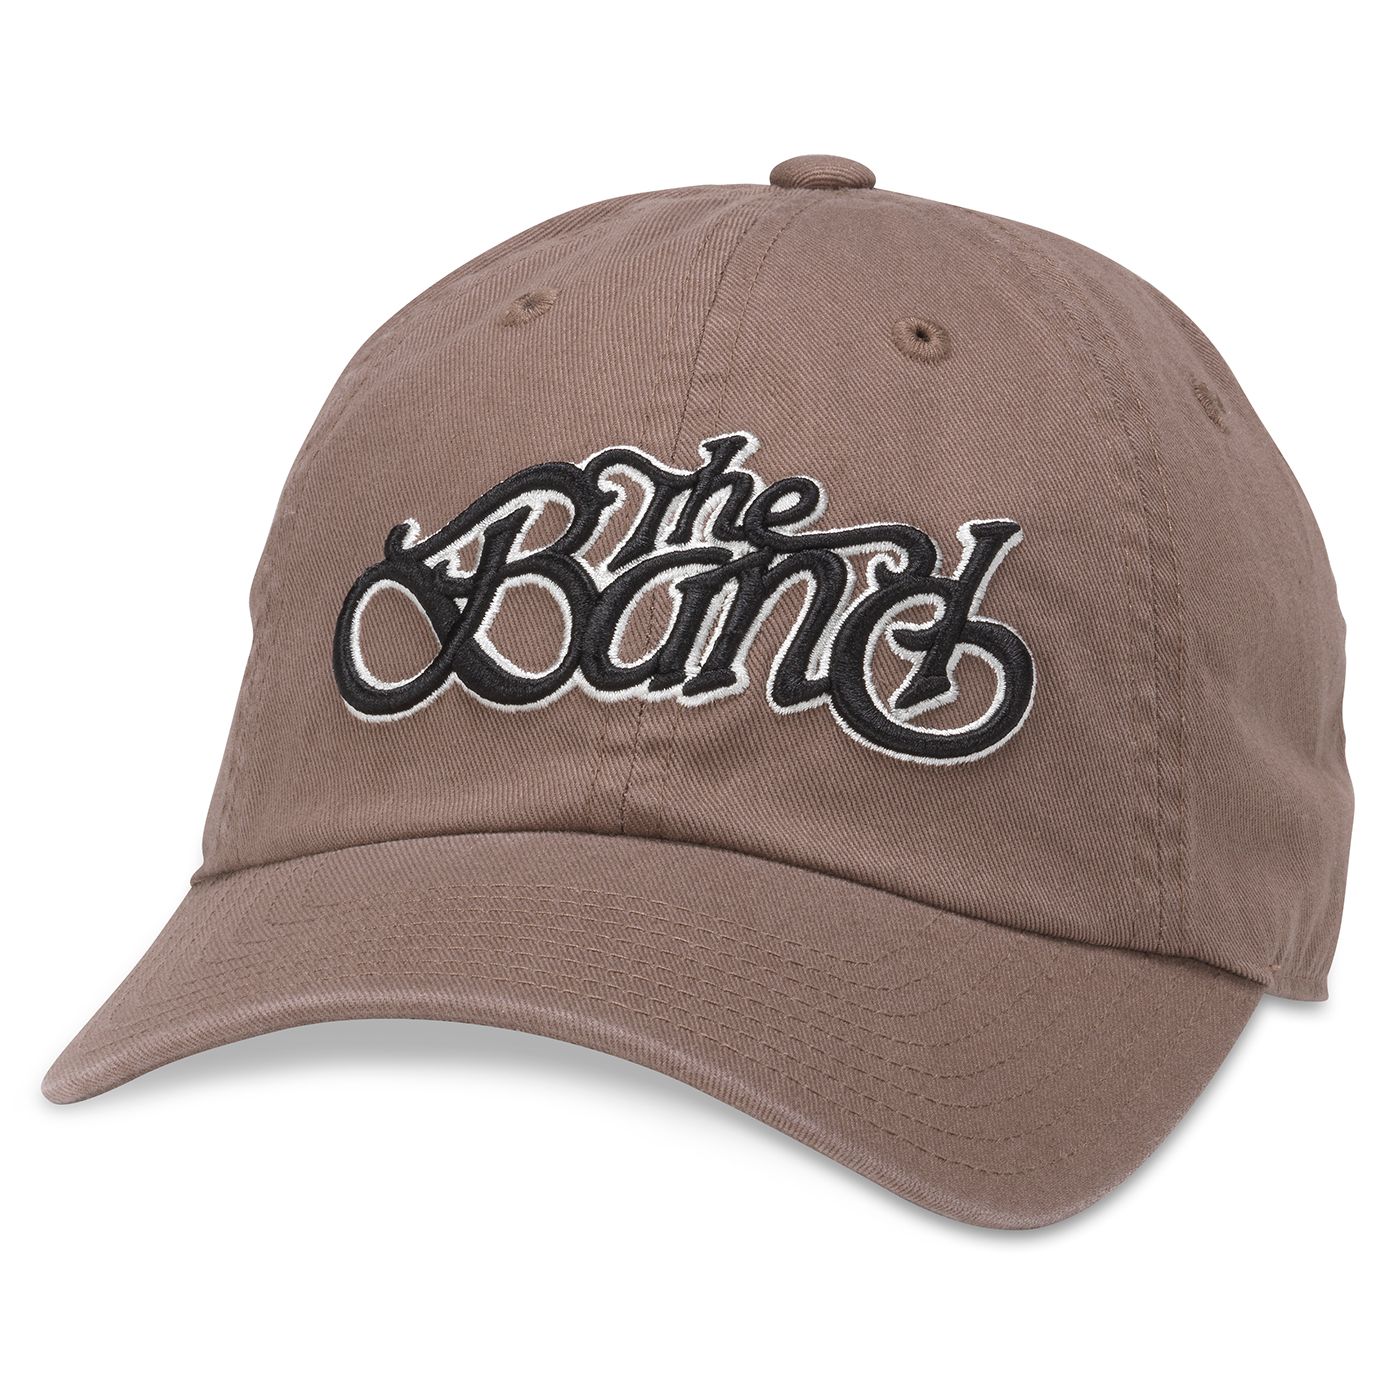 The Band Ballpark Hat